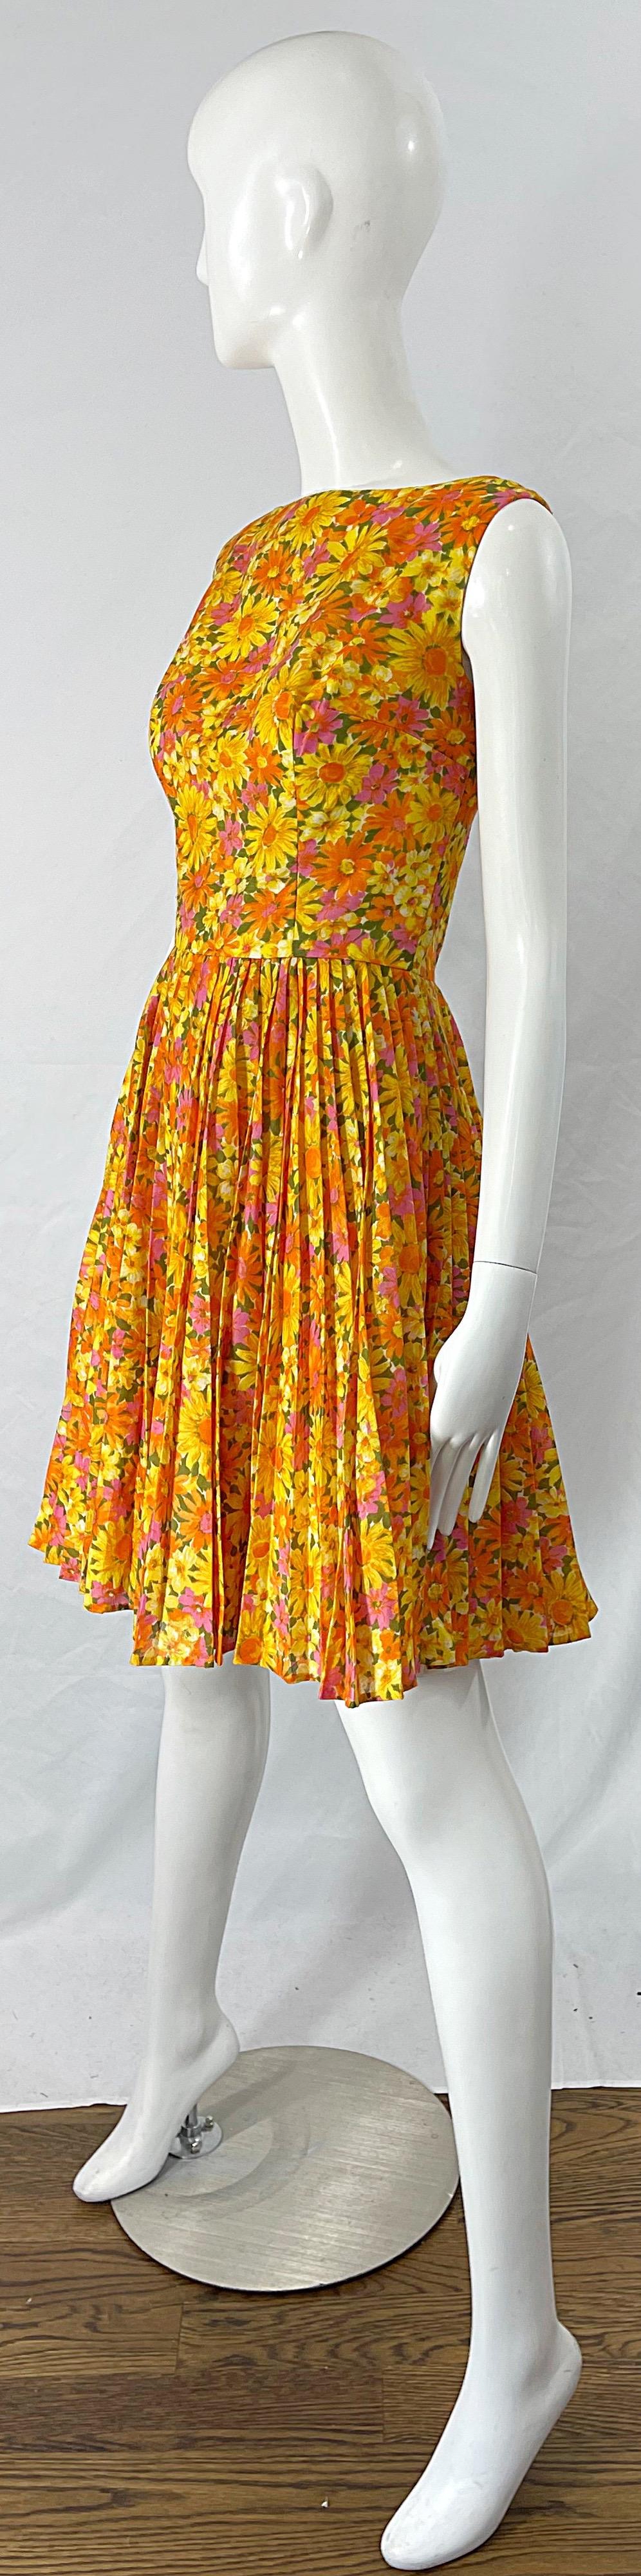 1950s Suzy Perette Yellow Pink Orange Daisy Print Cotton Vintage 50s Dress For Sale 5